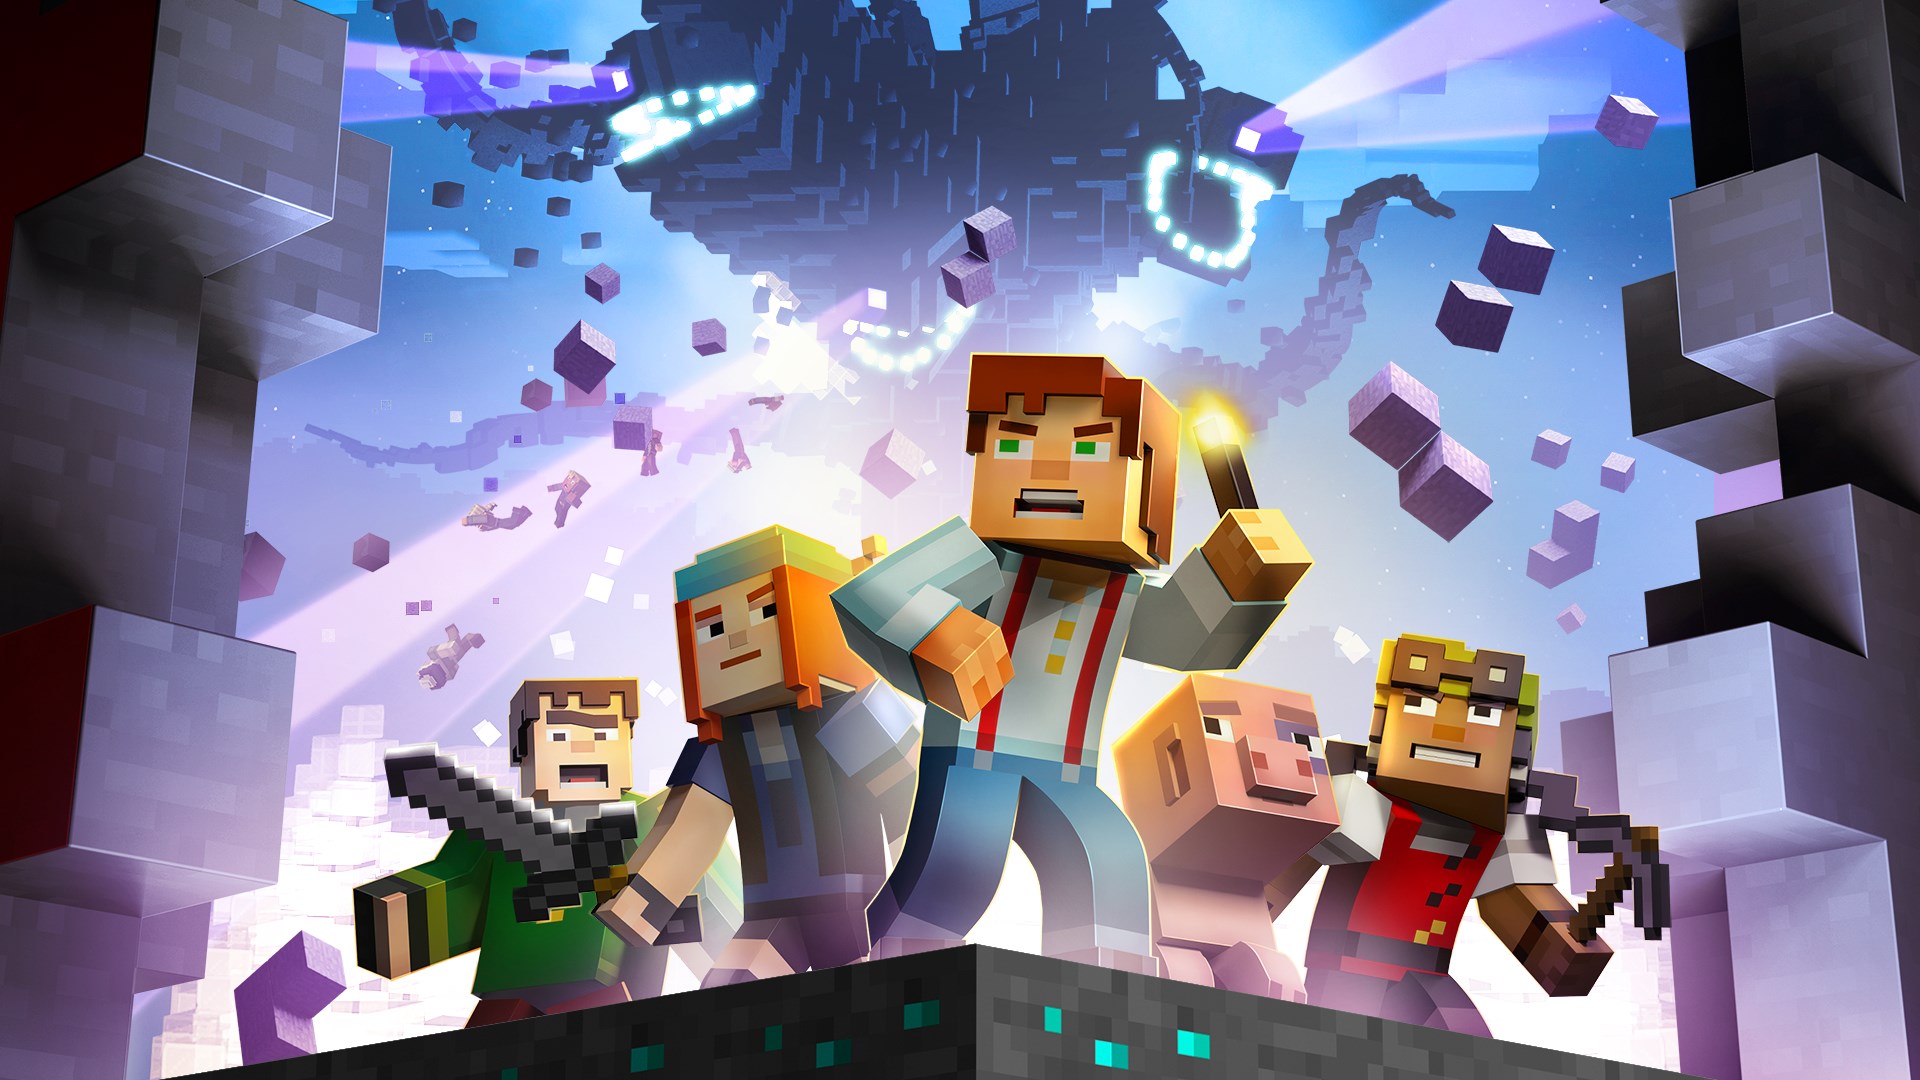 Minecraft Story Mode: Season 2 Xbox One X Review